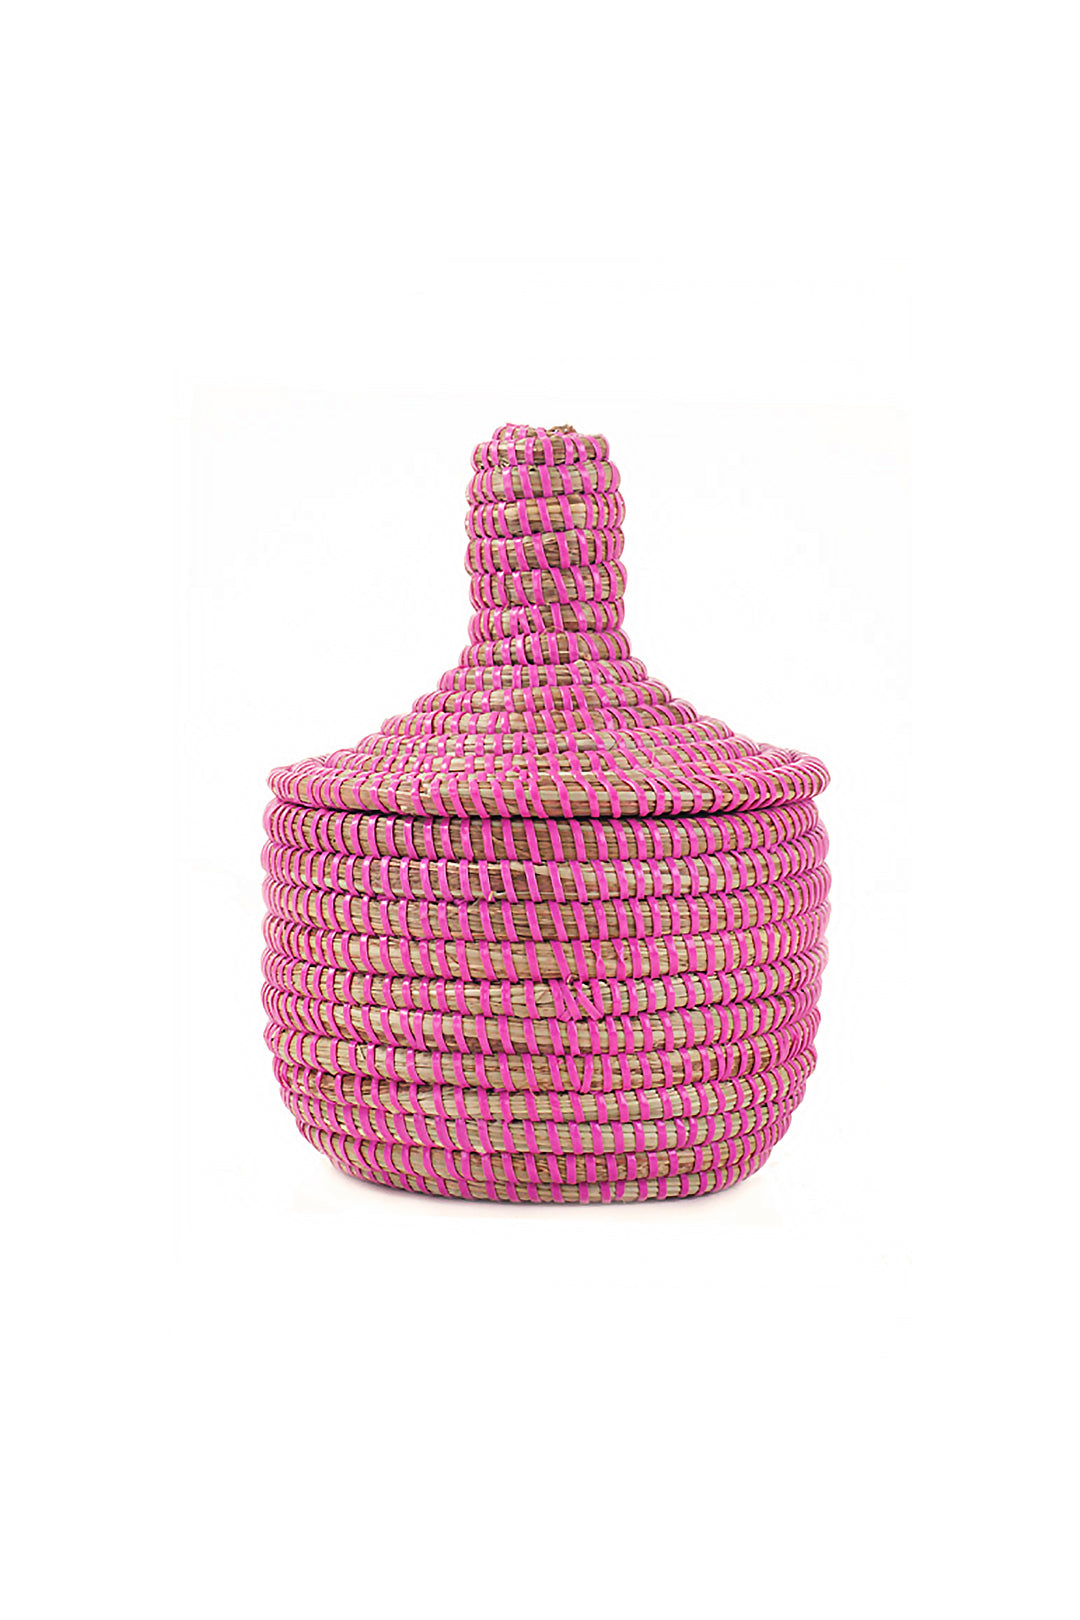 Miniature Pink Basket